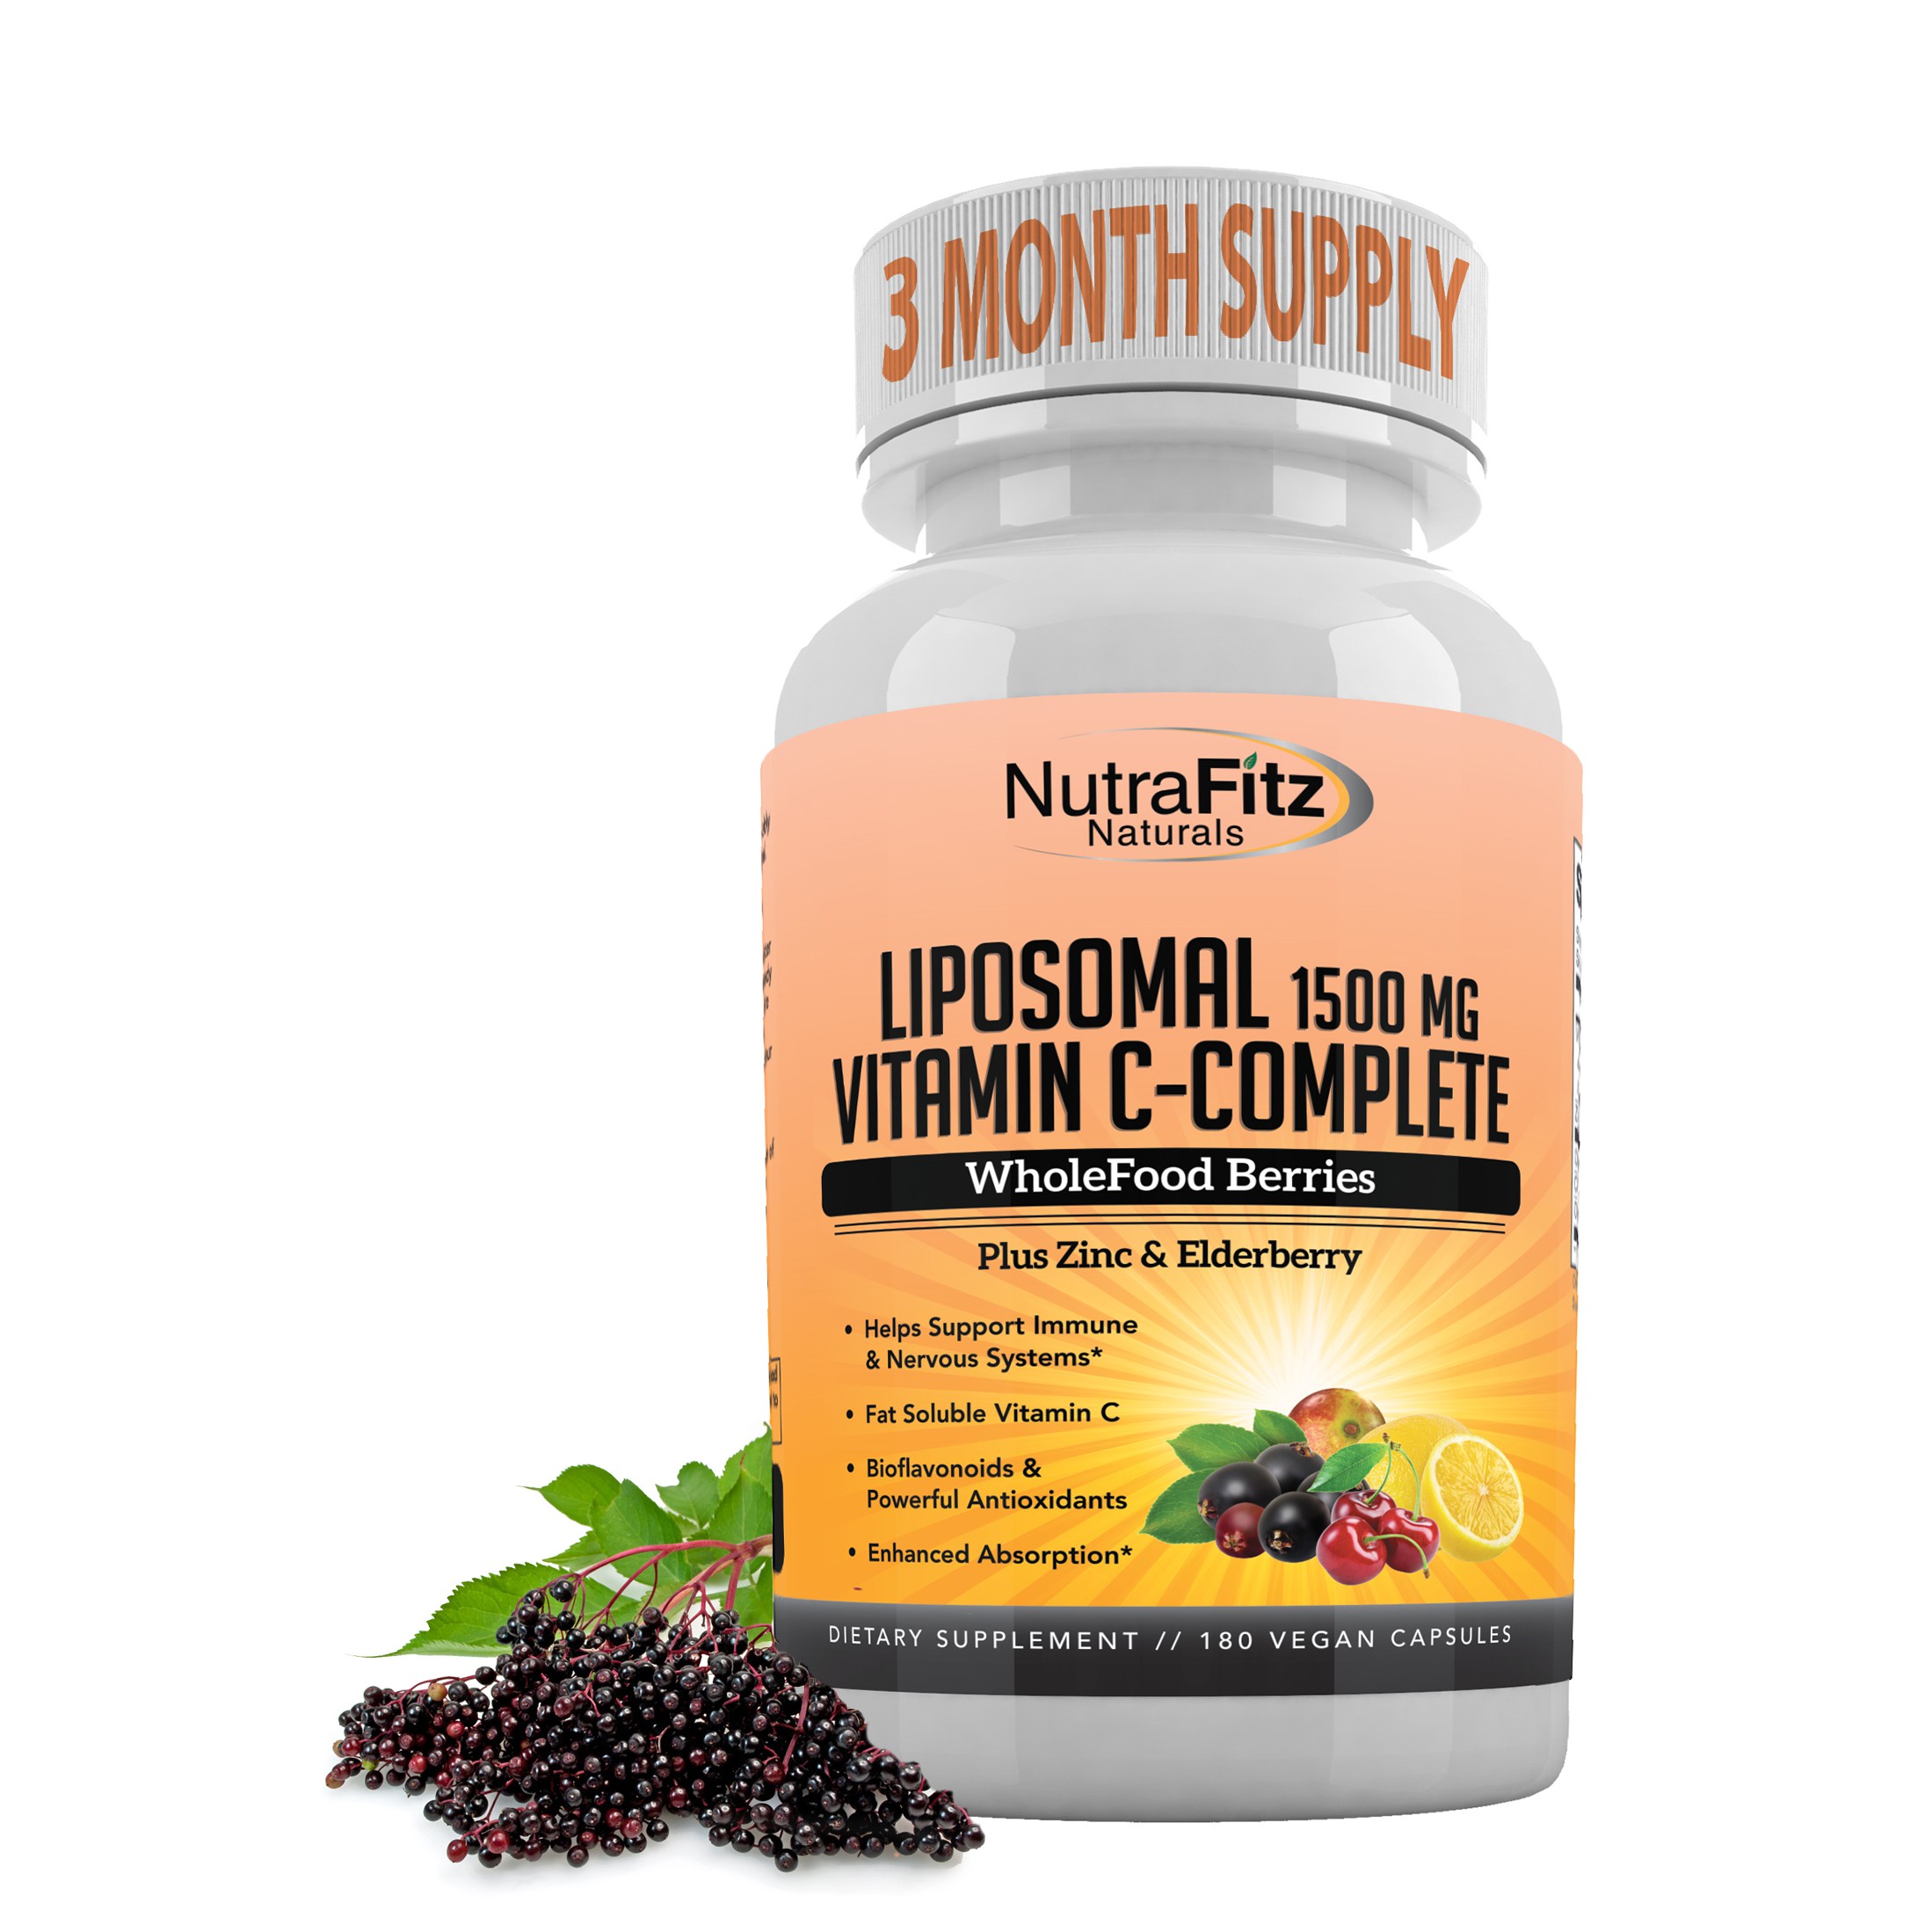 Liposomal-Vitamin-C with cash back rebate